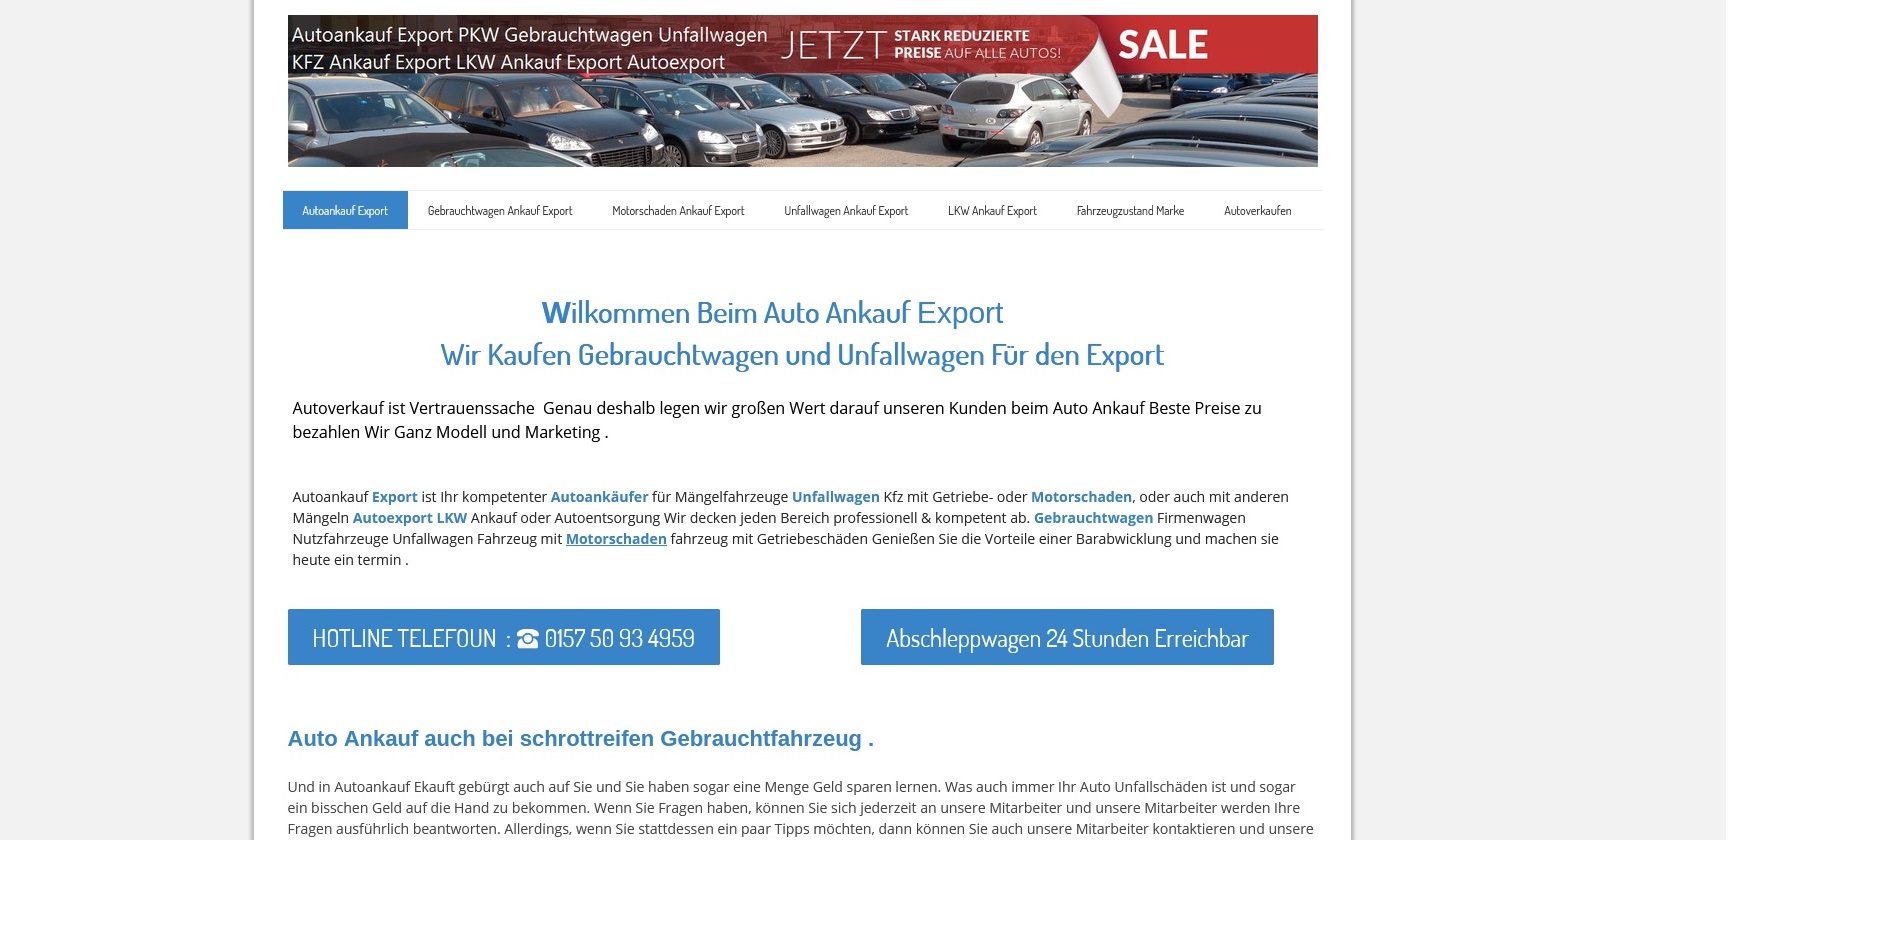 autoankauf heilbronn durch profi professionellen auto verkaufen - Autoankauf Heilbronn durch Profi professionellen Auto verkaufen